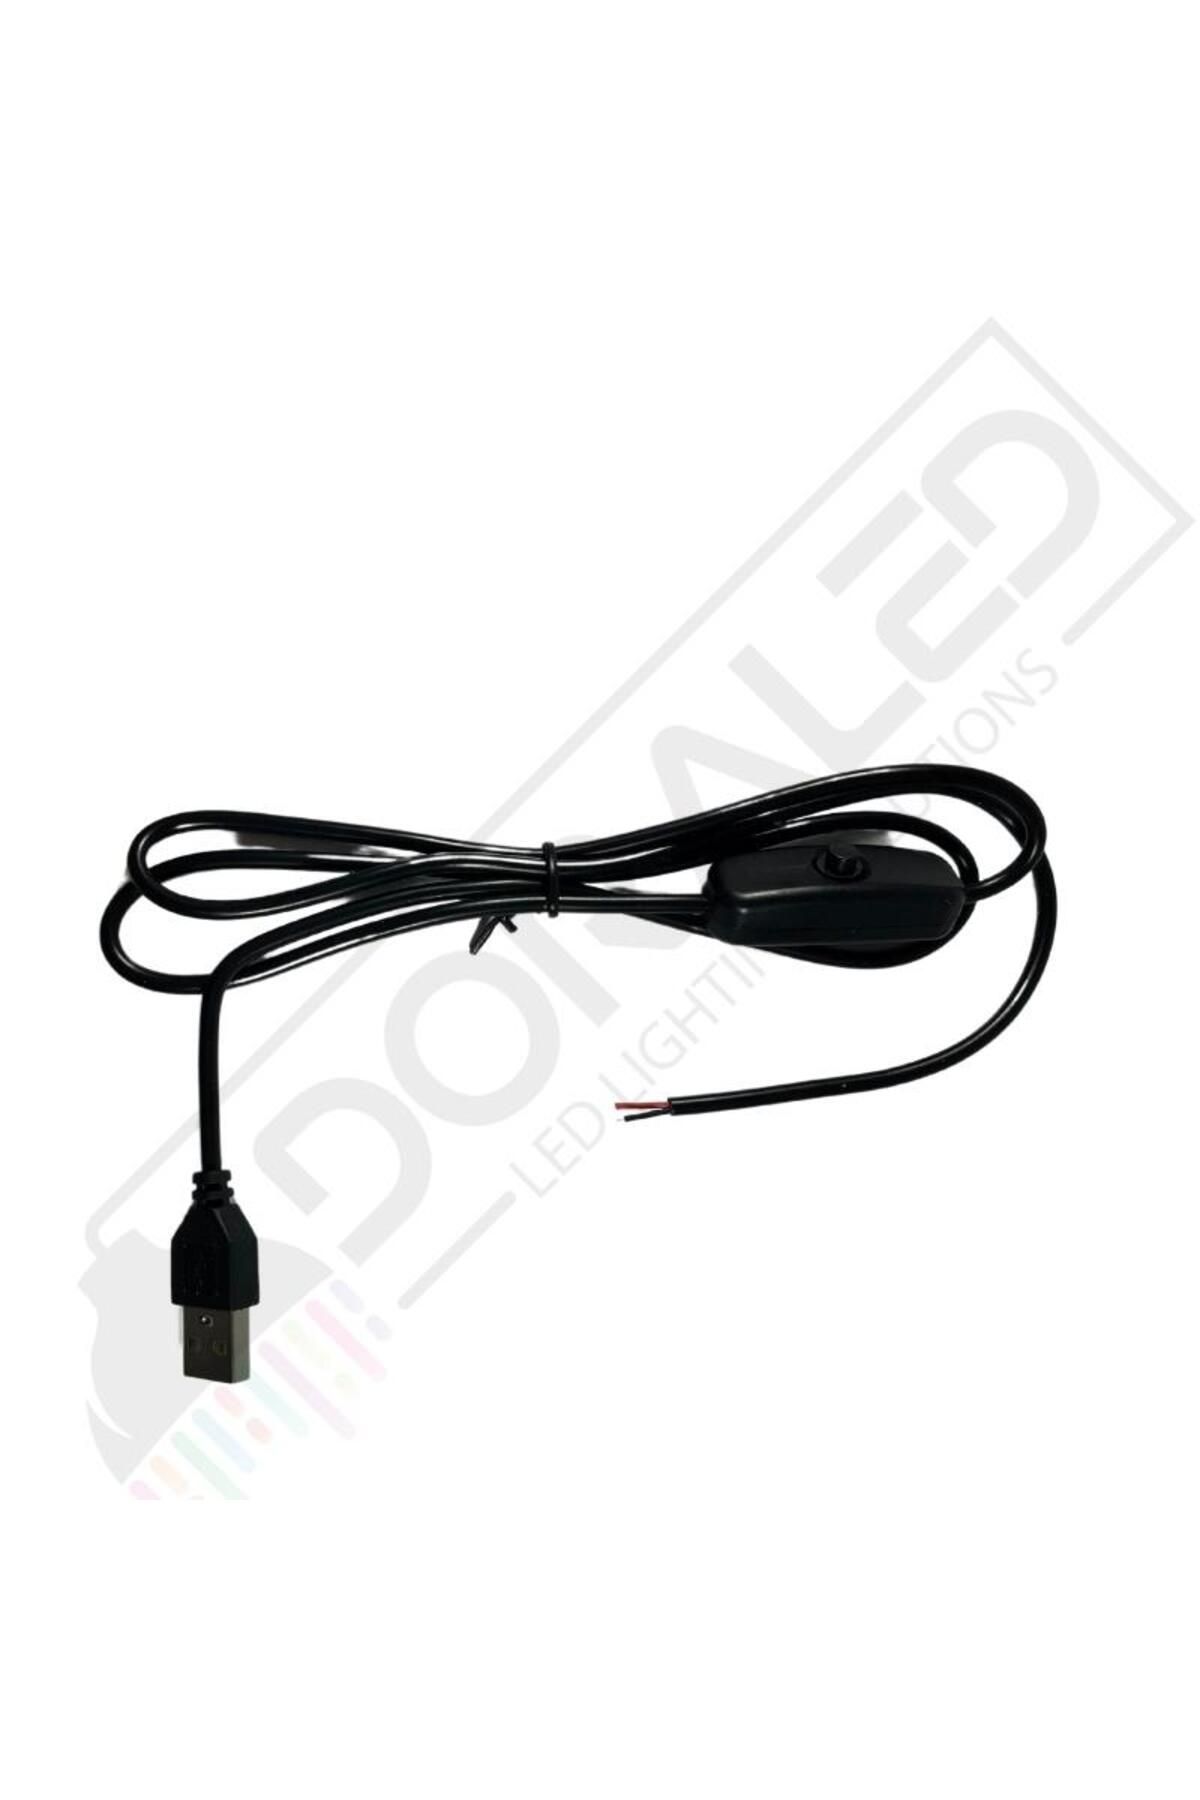 DORA LED 100 cm Swich li USB Erkek Kablo 2 Amper Ucu Açık Anahtarlı Siyah USB Kablo